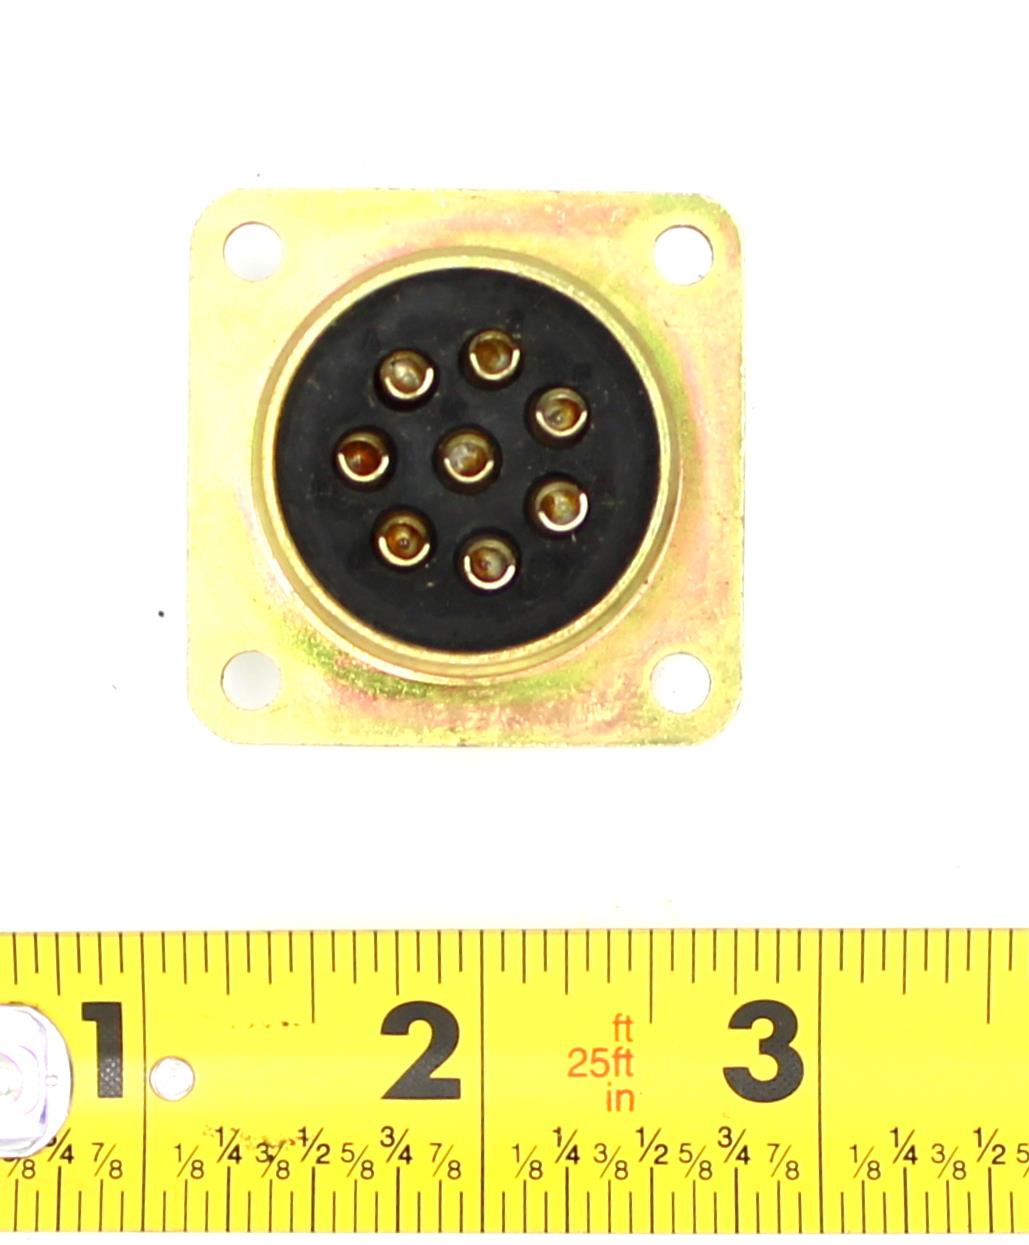 HM-912 | HM-912 Connector Receptacle Plug Update (4).JPG